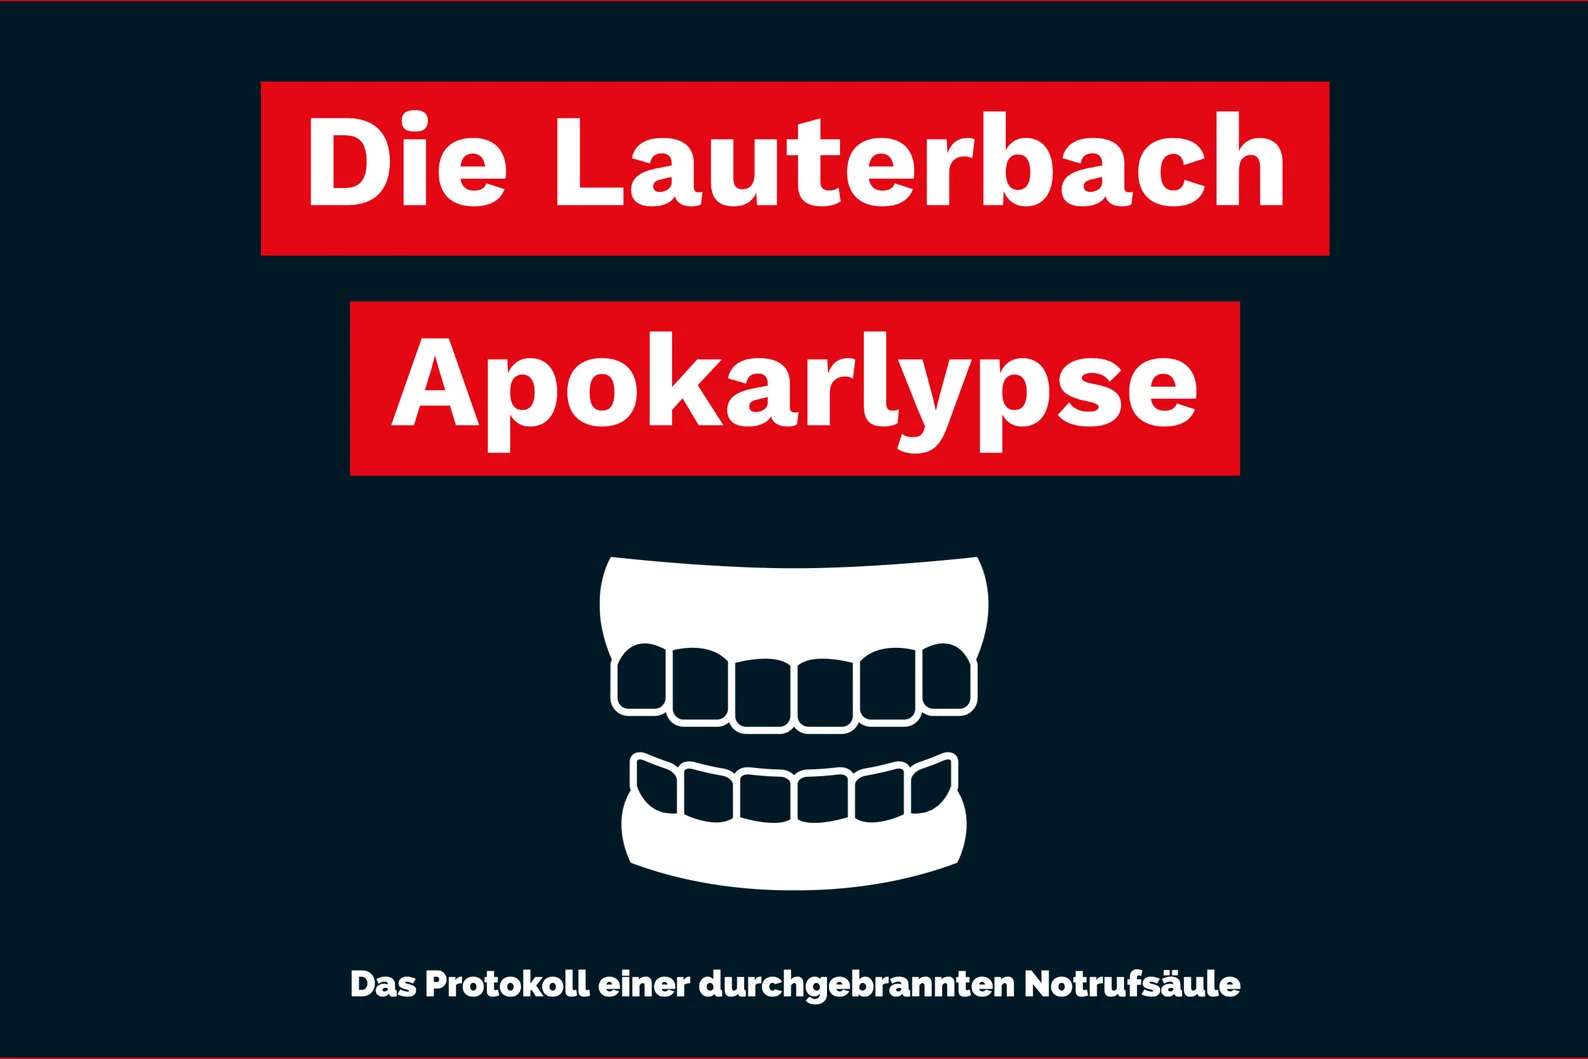 Die-Lauterbach-Apokarlypse